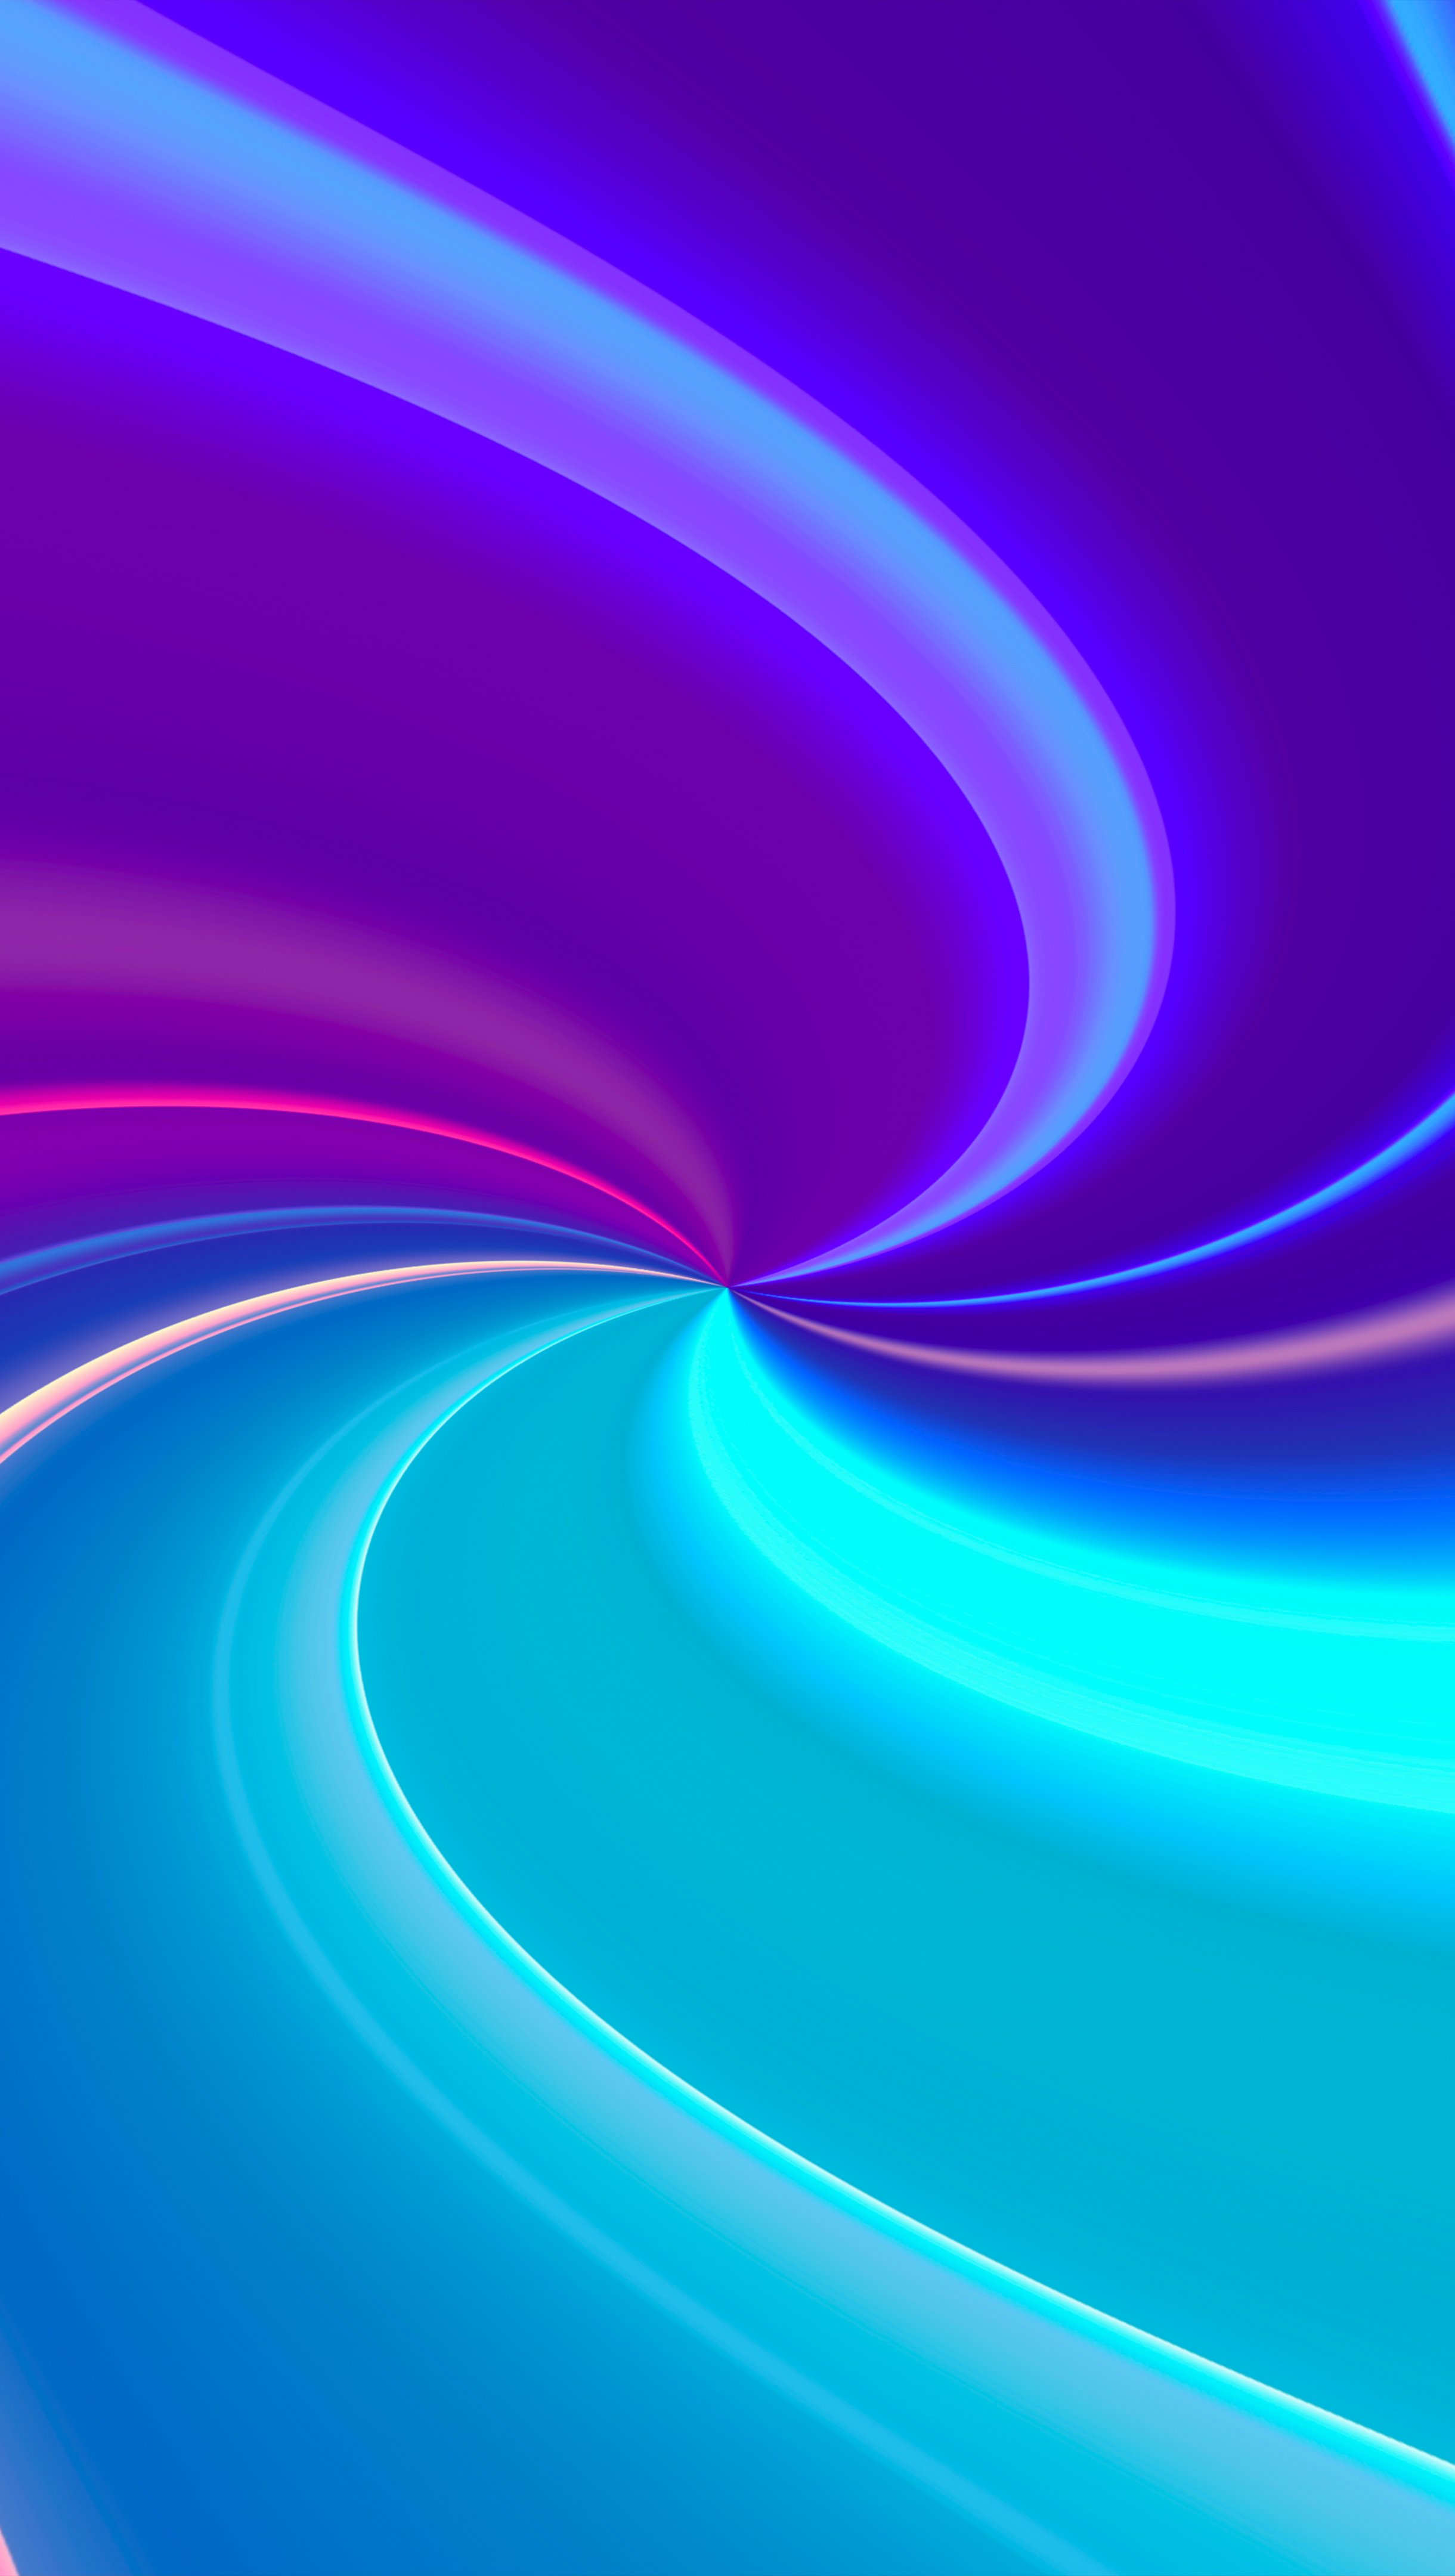 Fondos de pantalla Espiral neon azul y morado Vertical